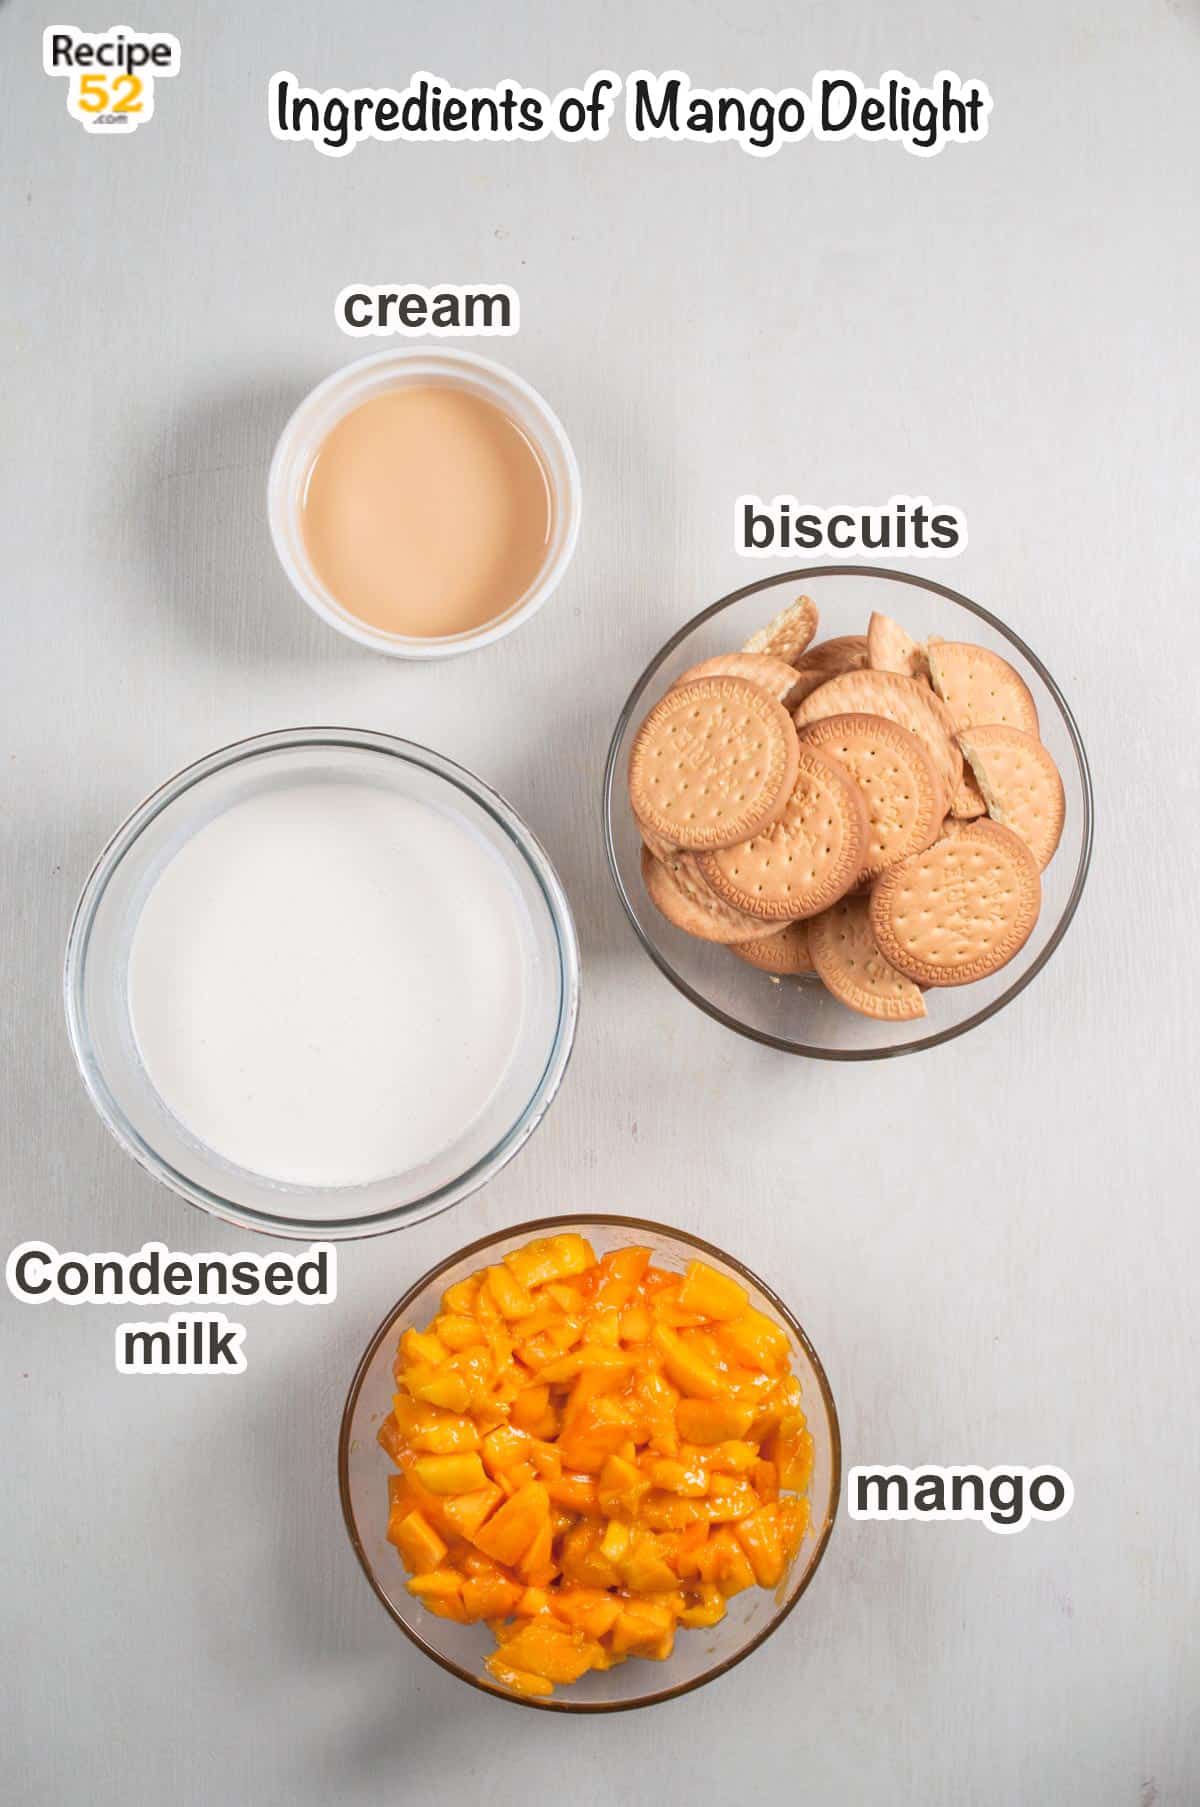 Ingredients of mango delight.